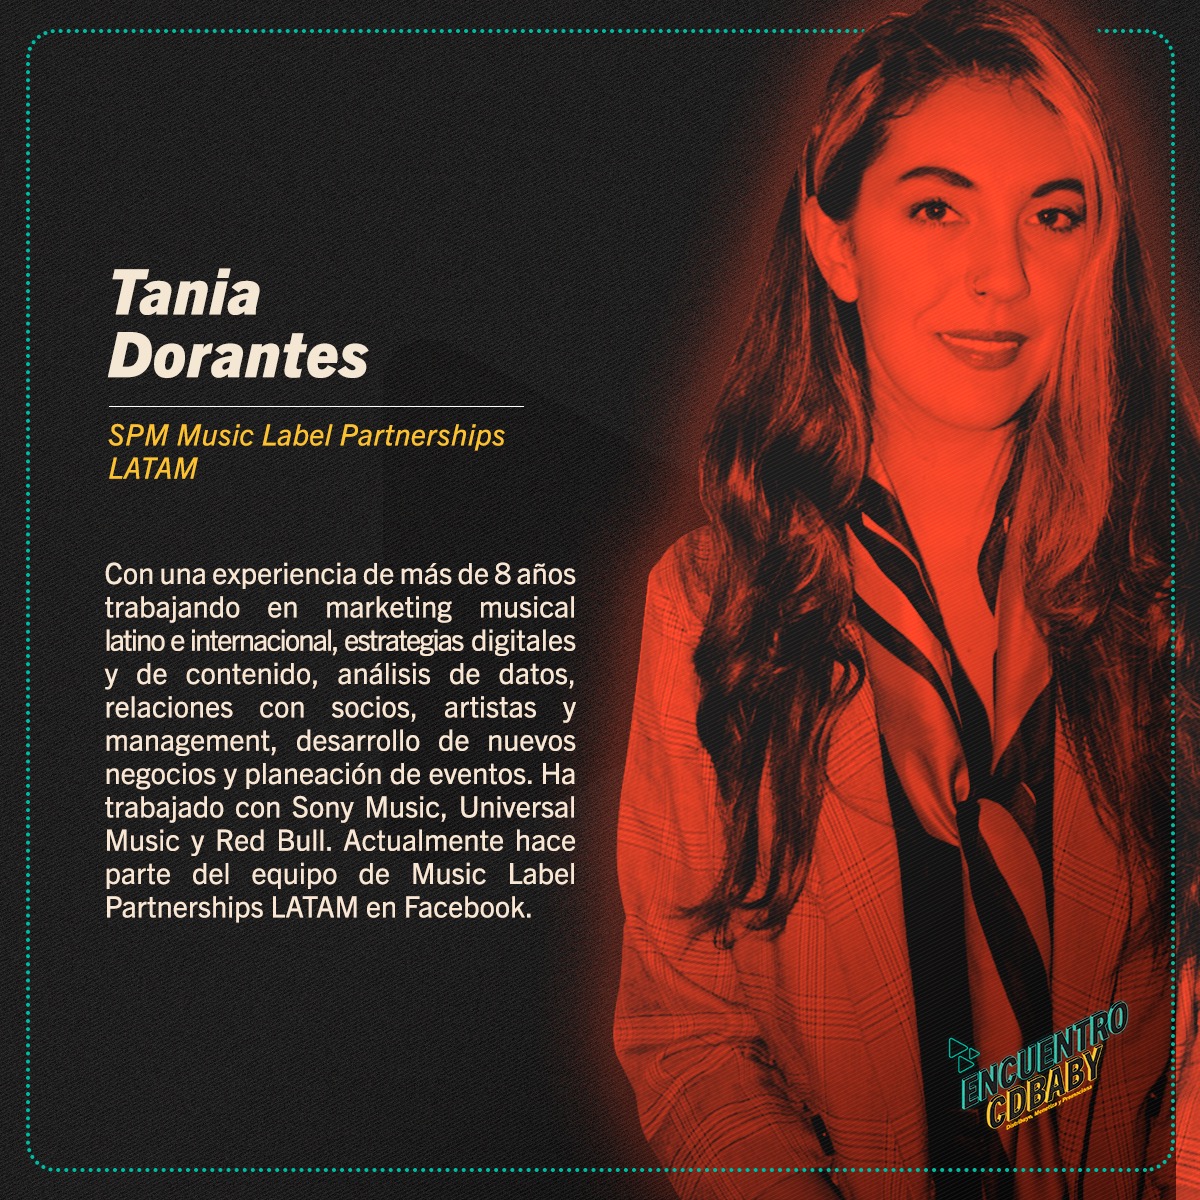 Tania Dorantes